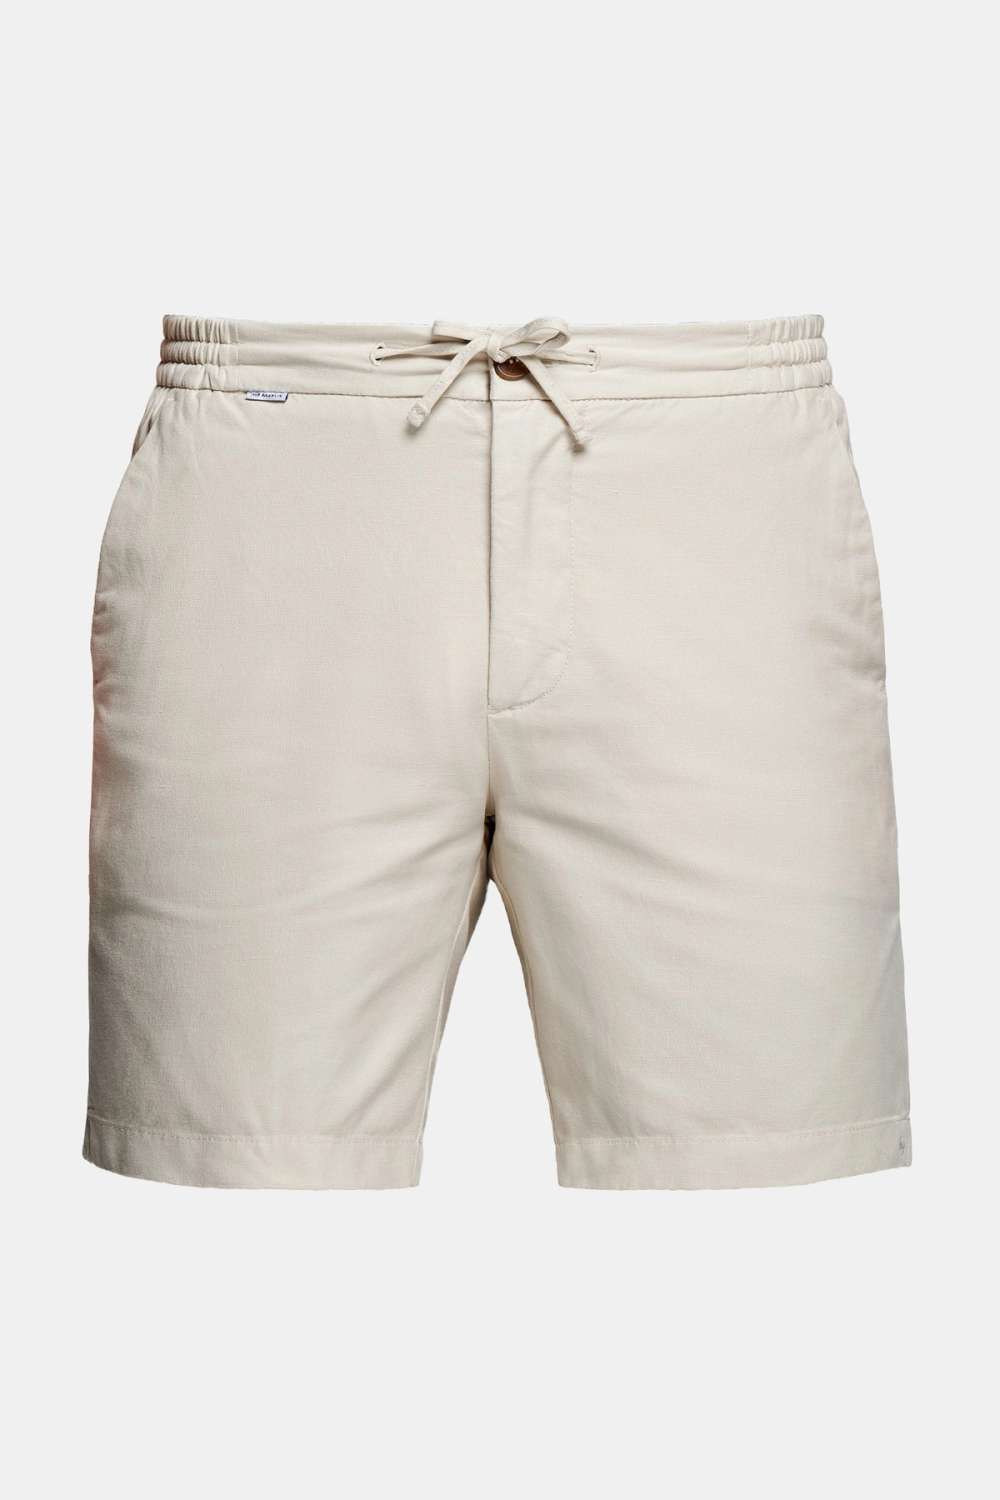 Men's Linen Shorts, The Short Linens